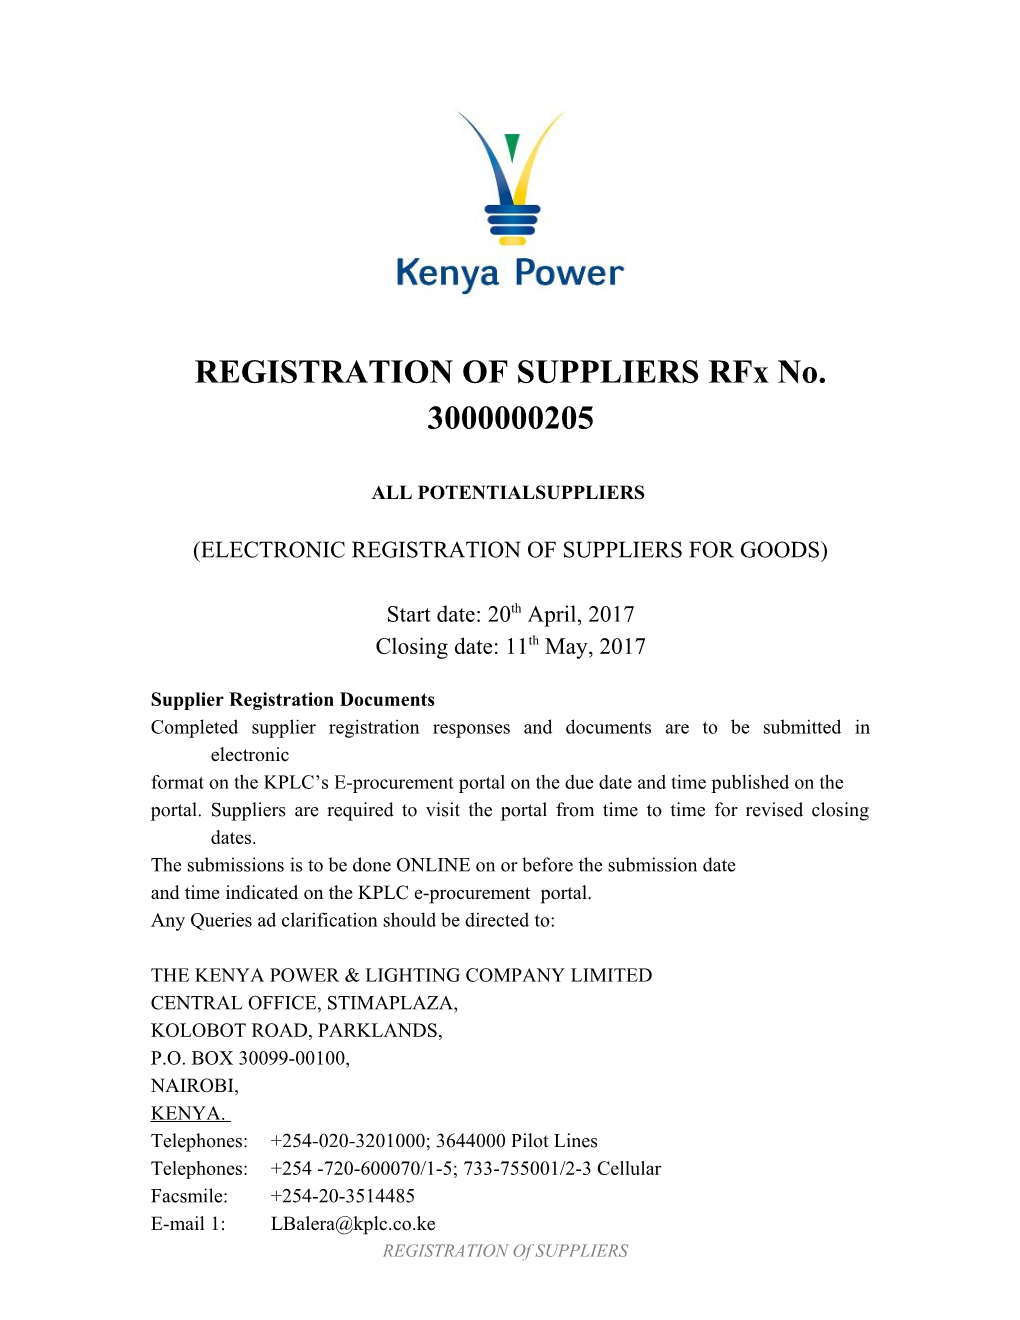 REGISTRATION of SUPPLIERS Rfx No. 3000000205